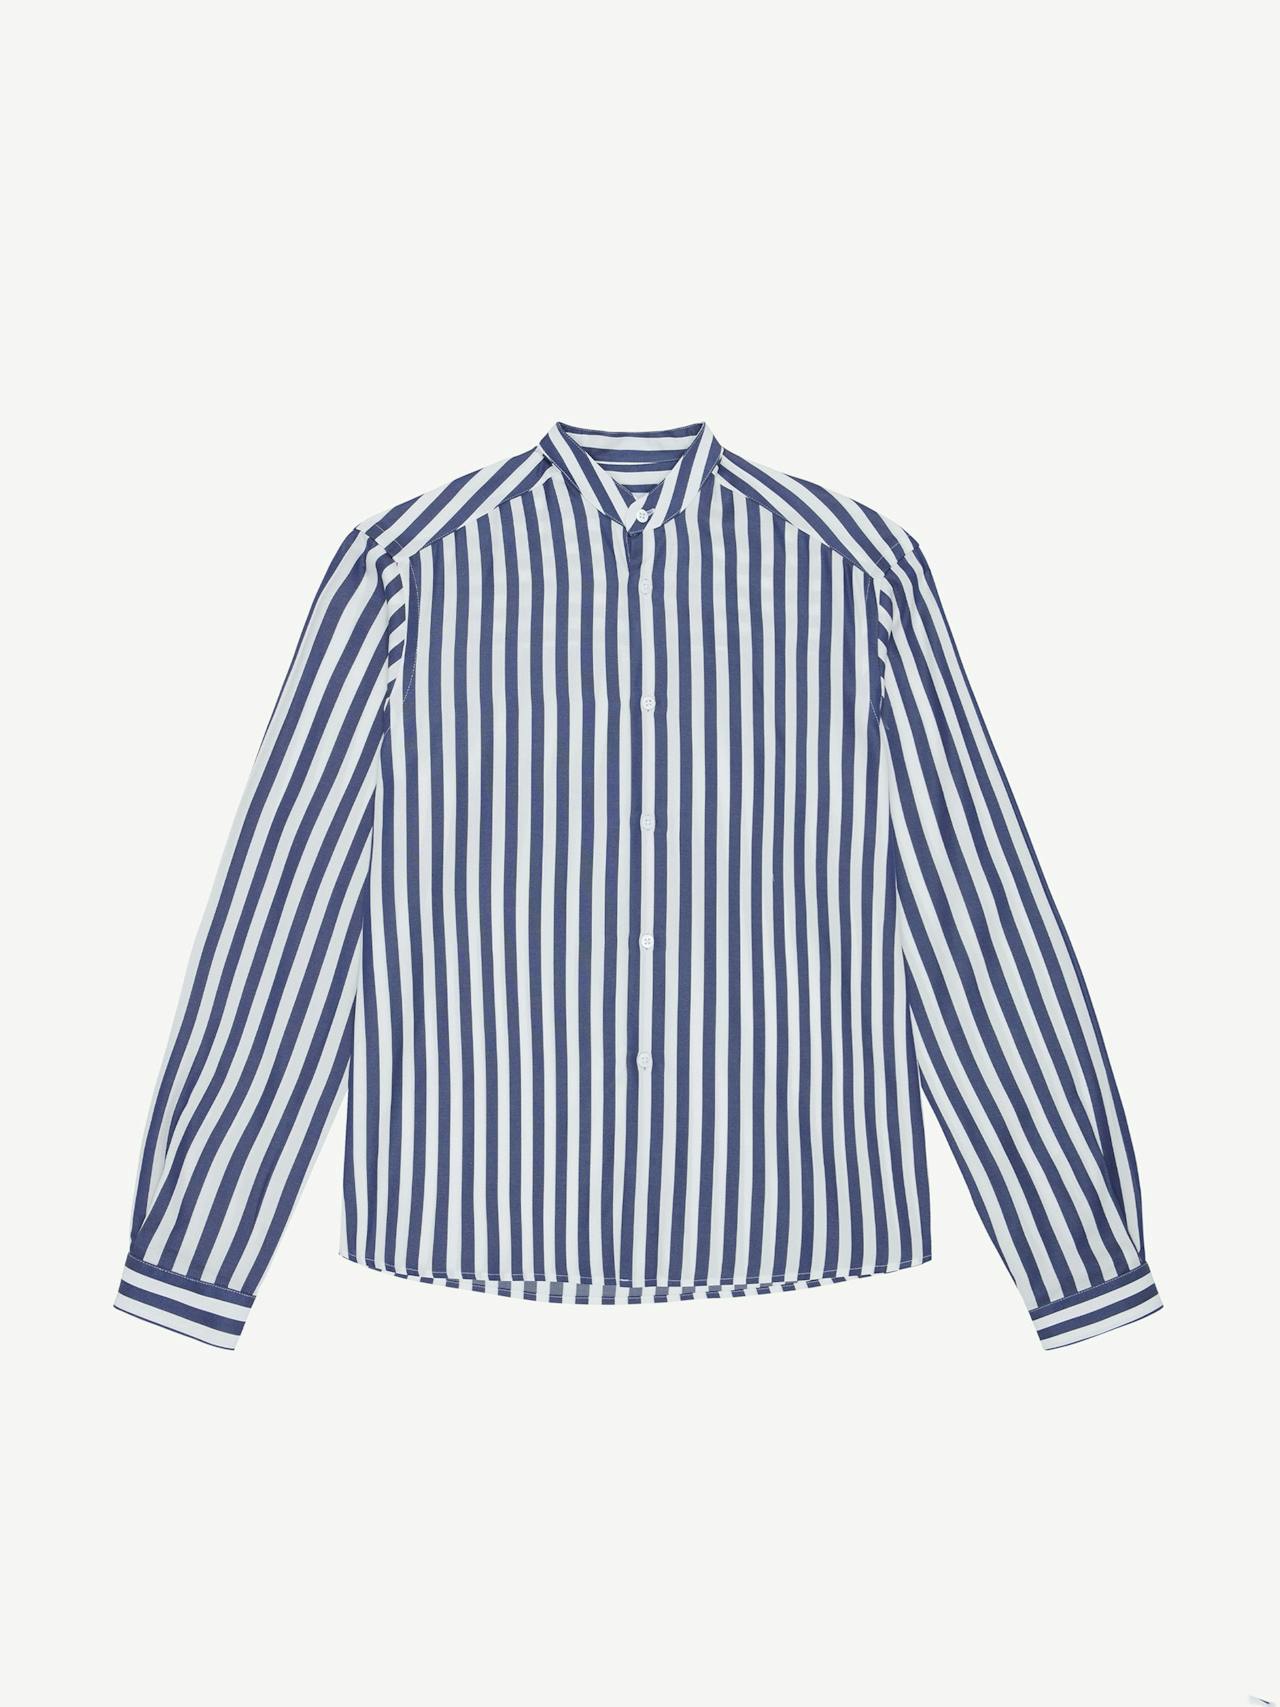 The Girlfriend Collarless tencel, navy blue stripe shirt